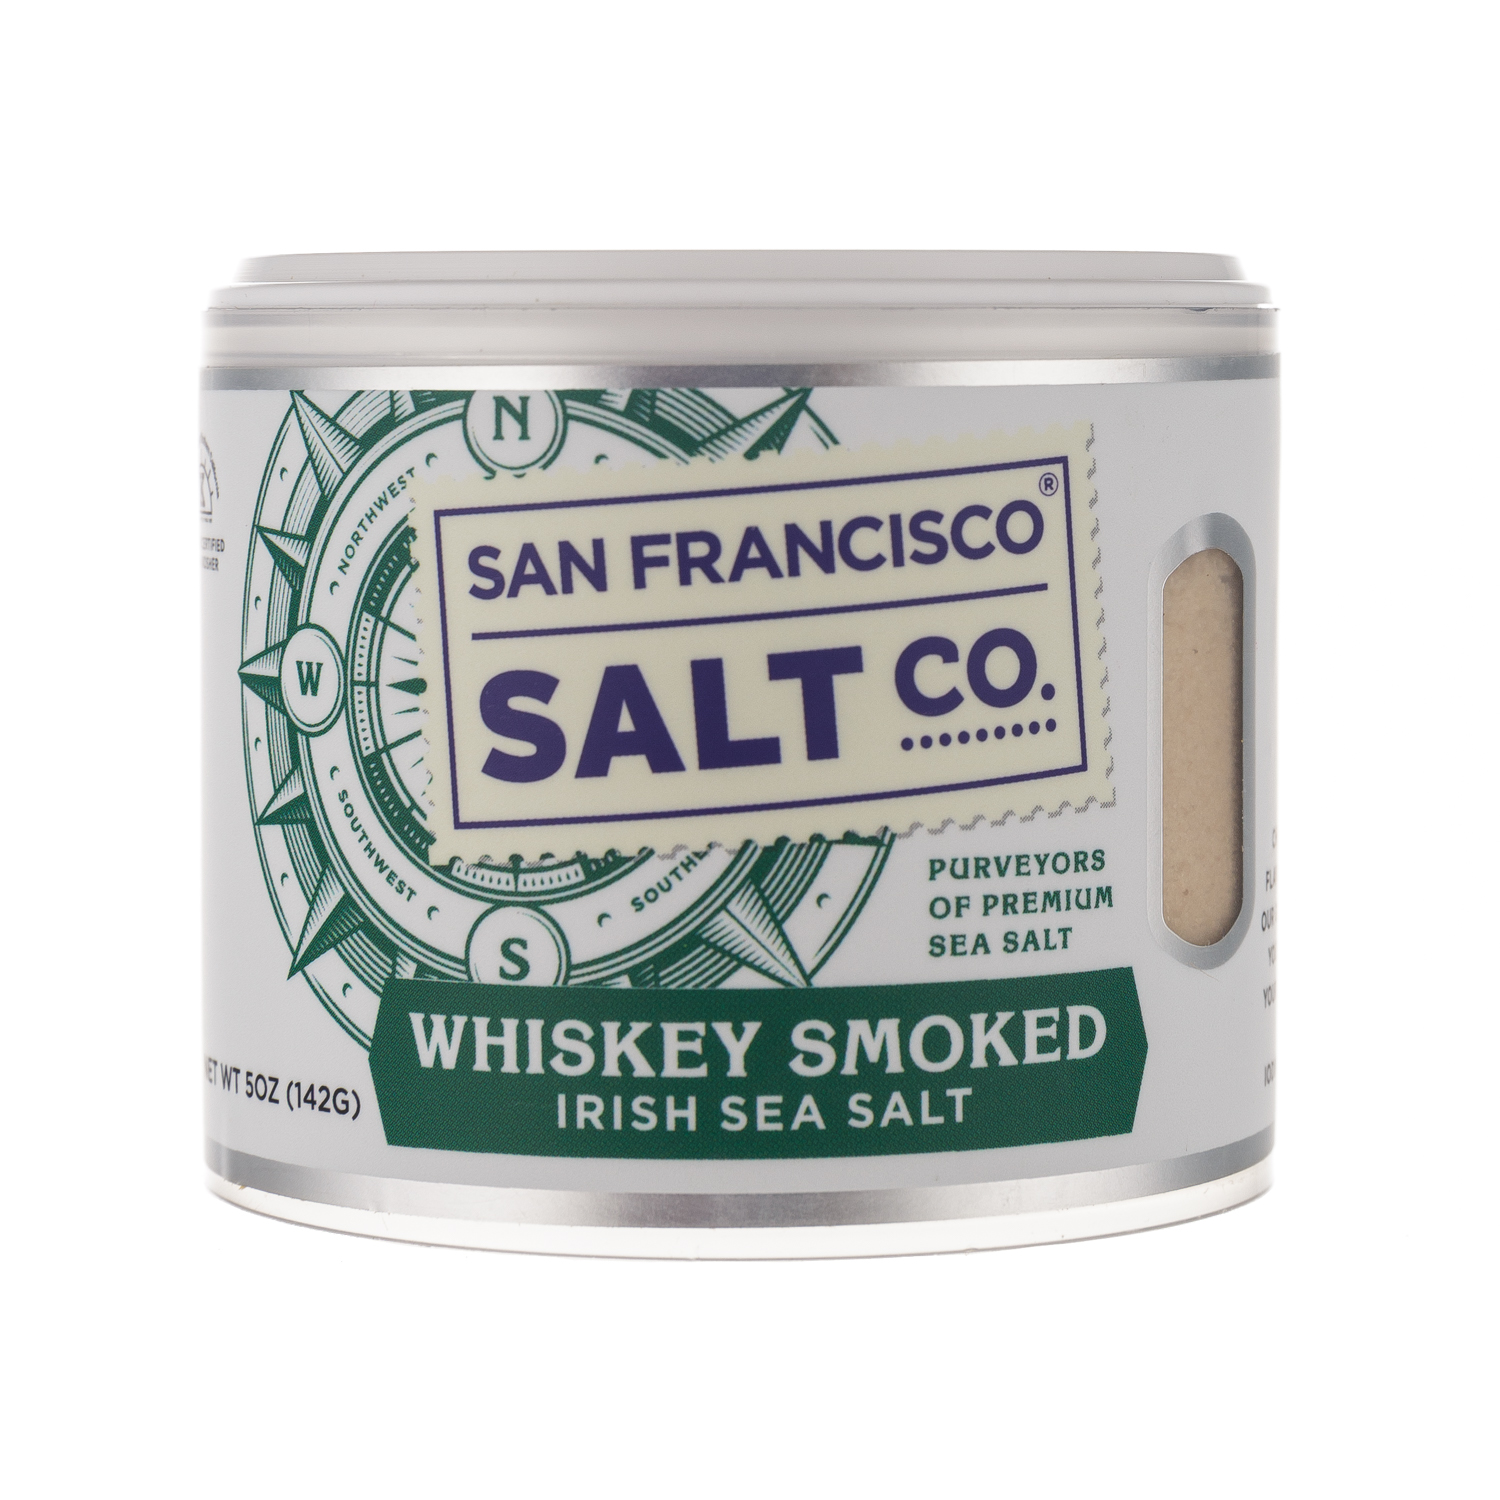 Whiskey Smoked Irish Sea Salt (5oz)